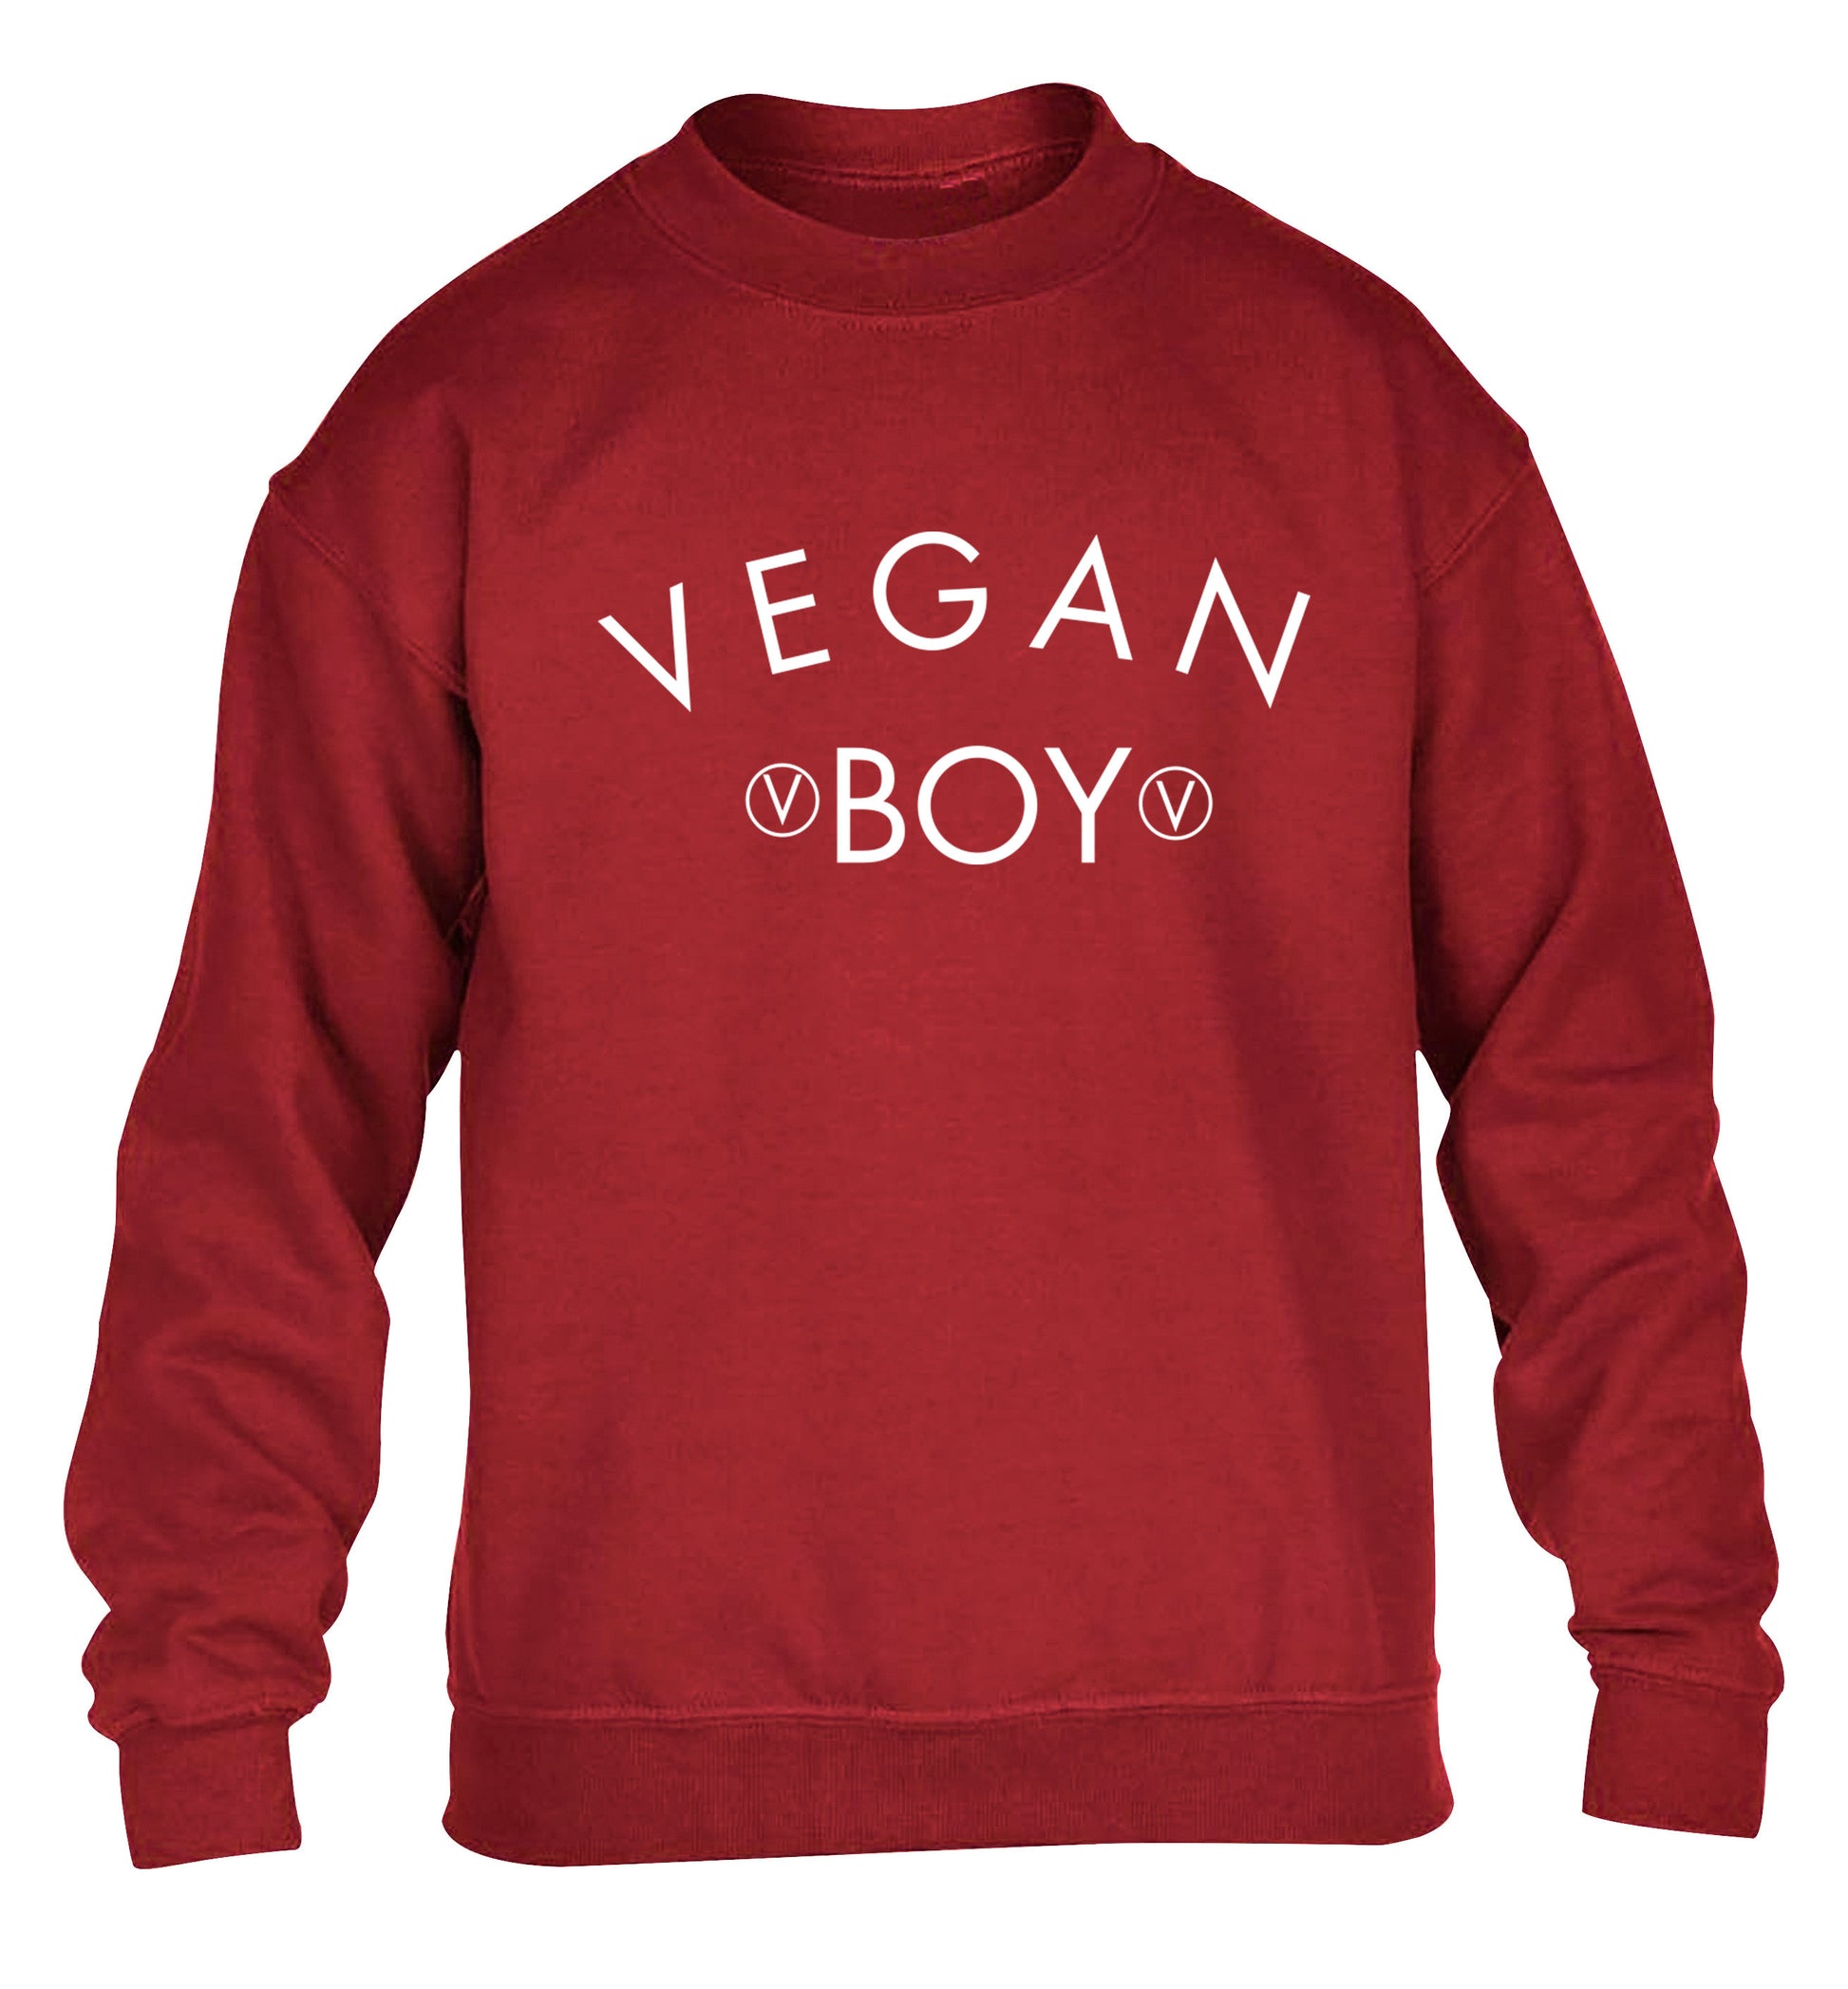 Vegan boy children's grey sweater 12-14 Years